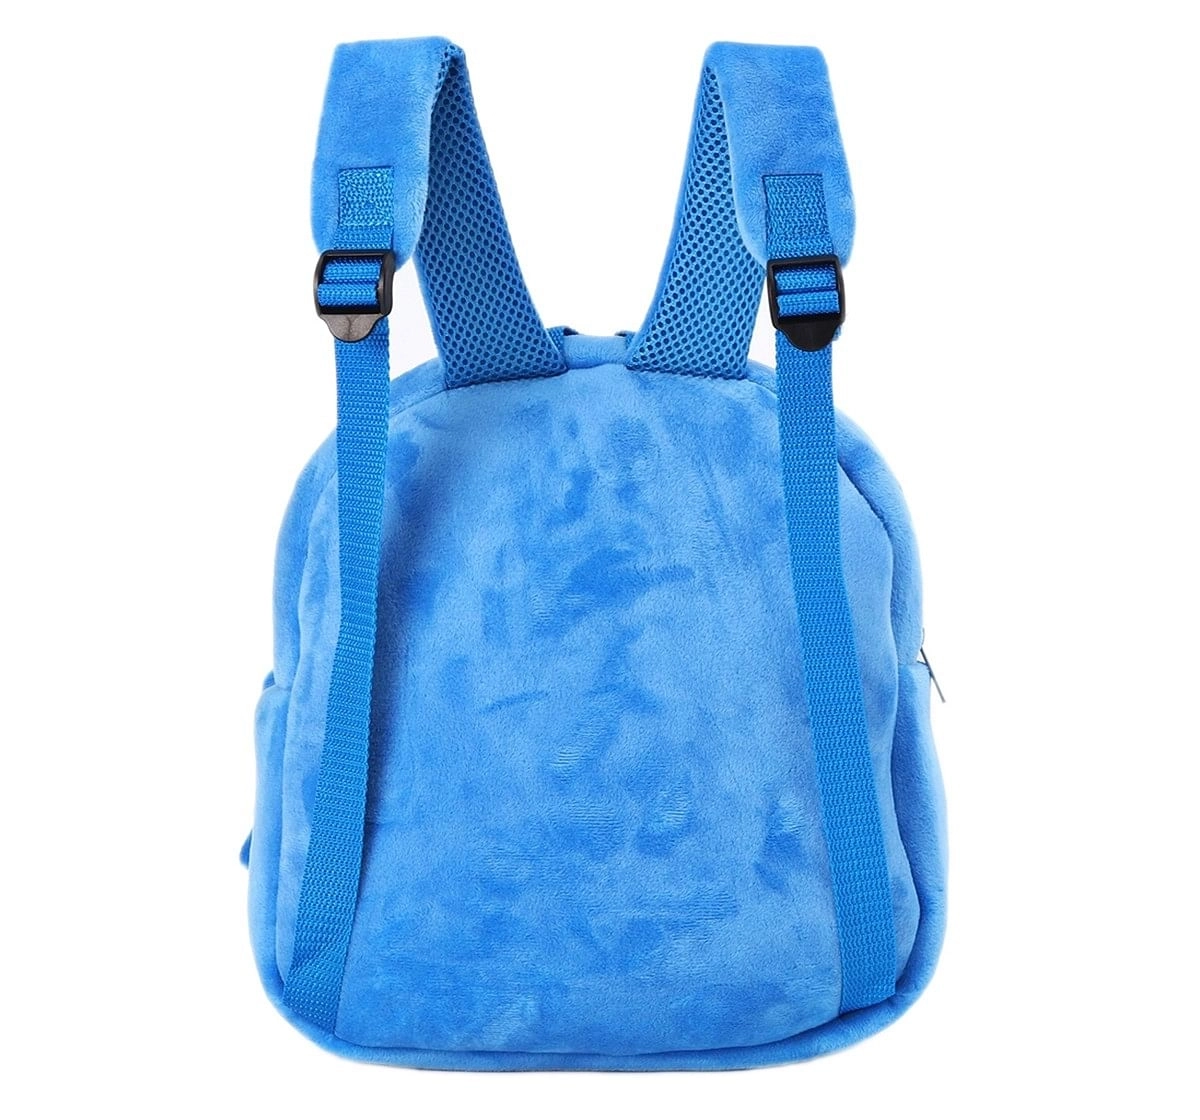 Baby Shark Daddy Shark Plush Bag, 0M+ (Blue)